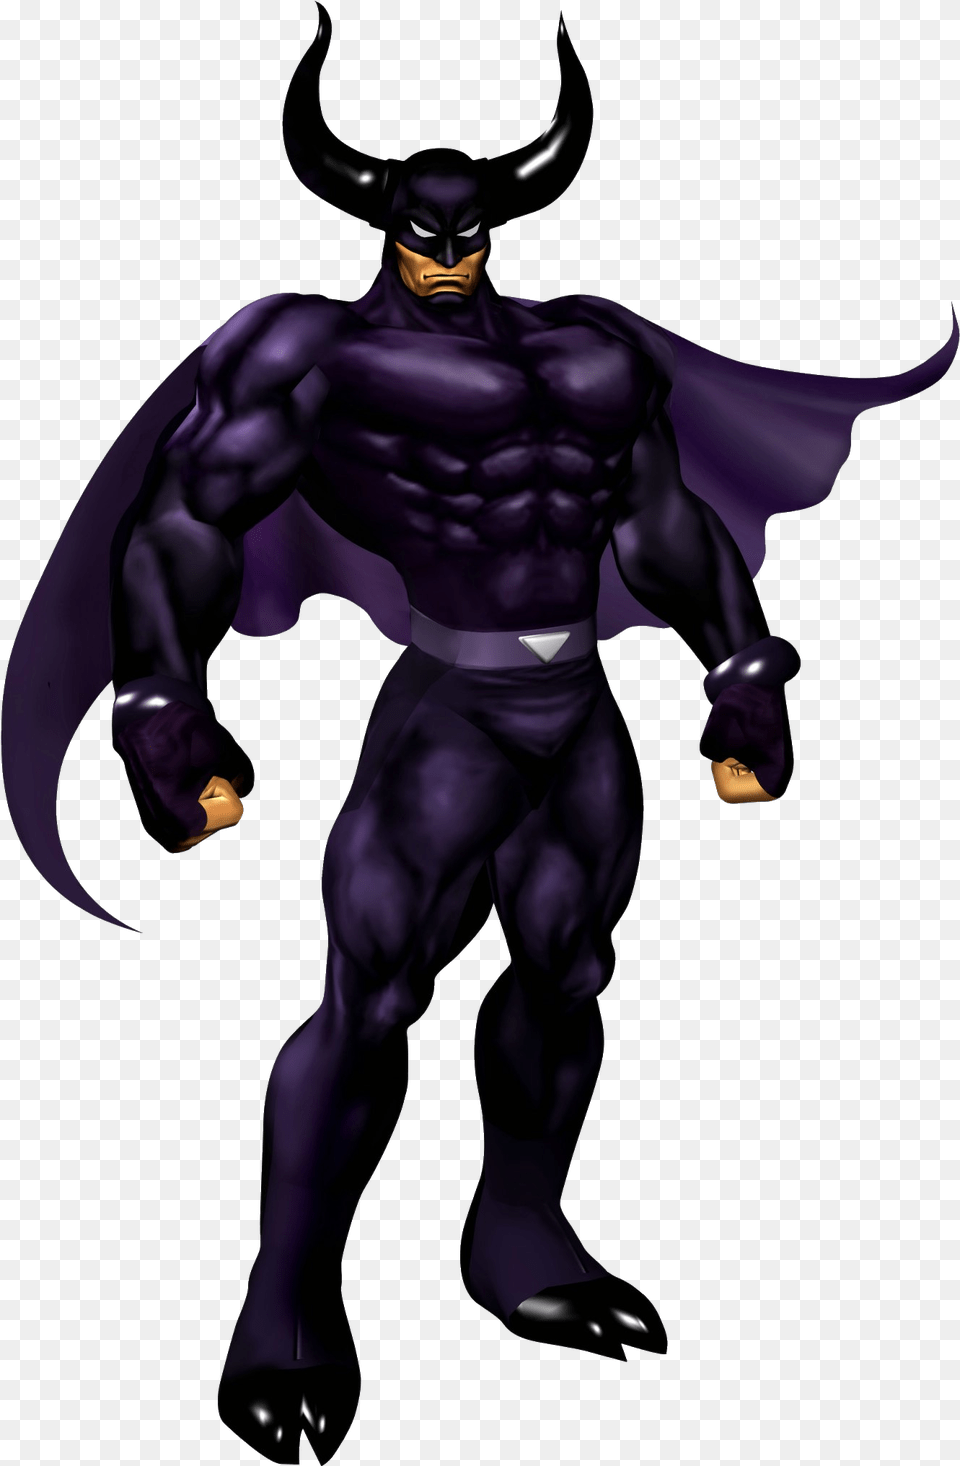 Smash Bros Black Shadow F Zero Black Shadow F Zero, Adult, Male, Man, Person Png Image